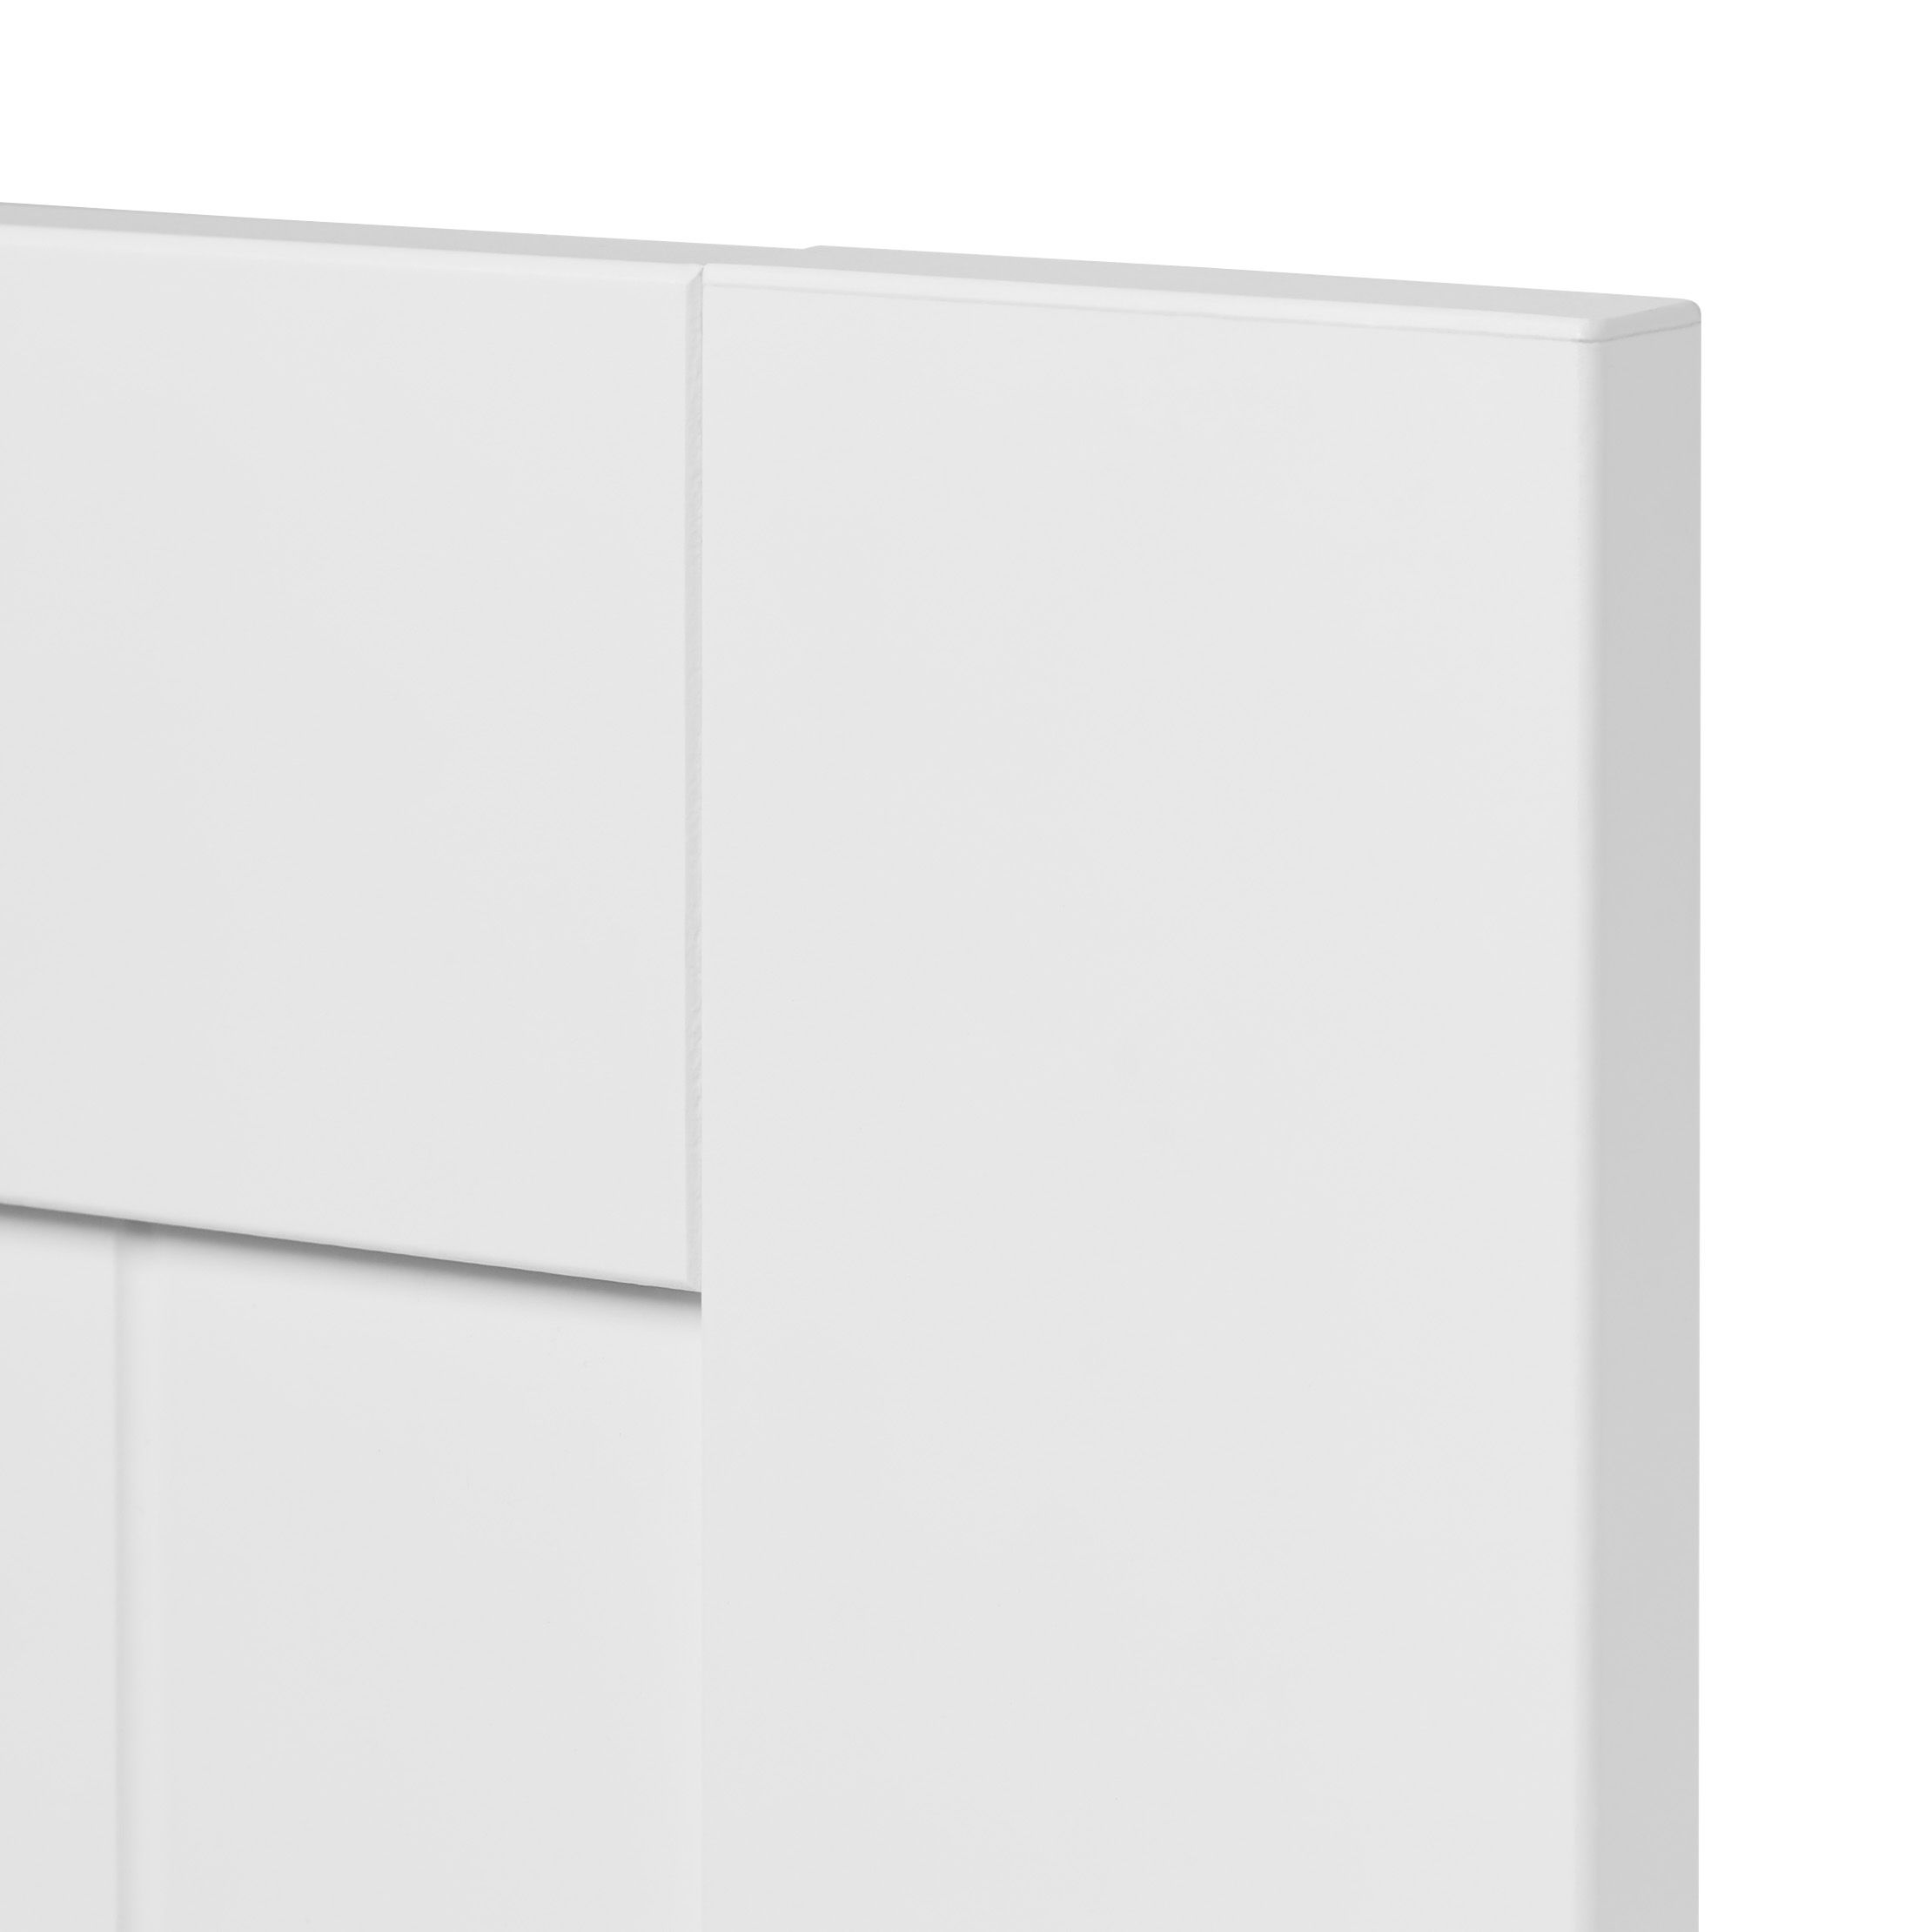 GoodHome Alpinia Matt white tongue & groove shaker Tall appliance Cabinet door (W)600mm (H)806mm (T)18mm